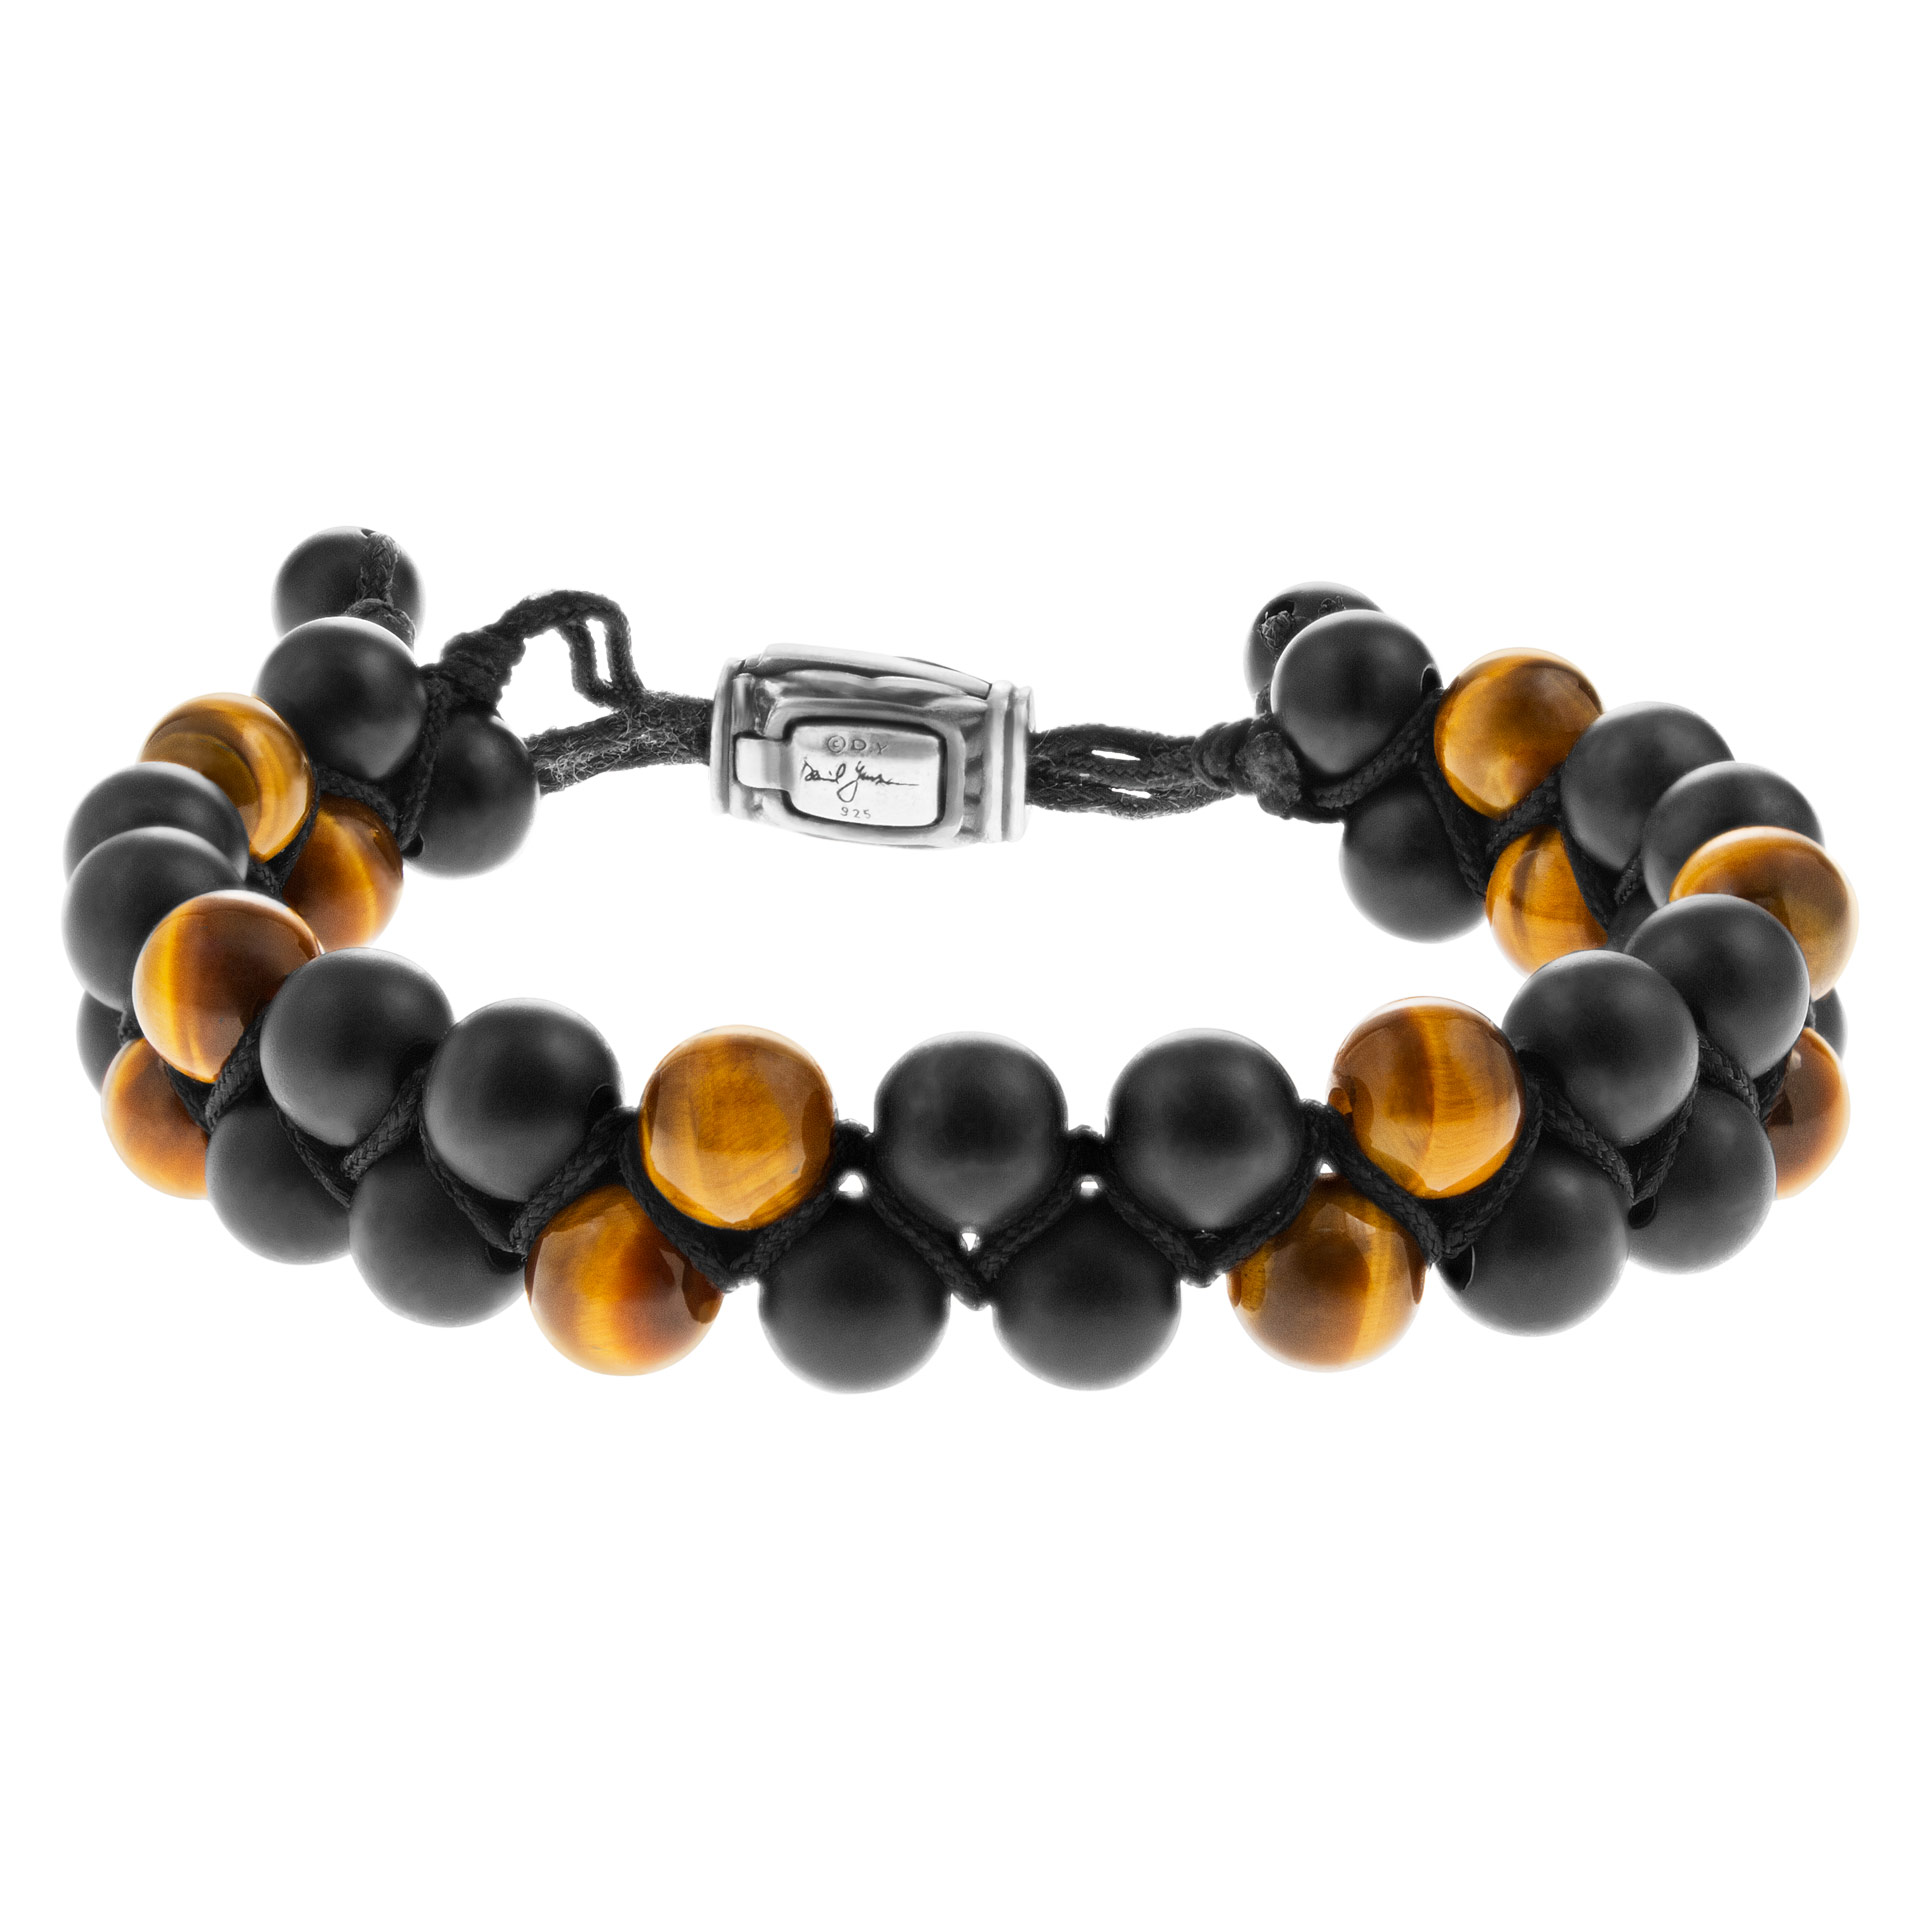 David Yurman spiritual beads two-row bracelet w/Black Onyx & Tiger's Eye